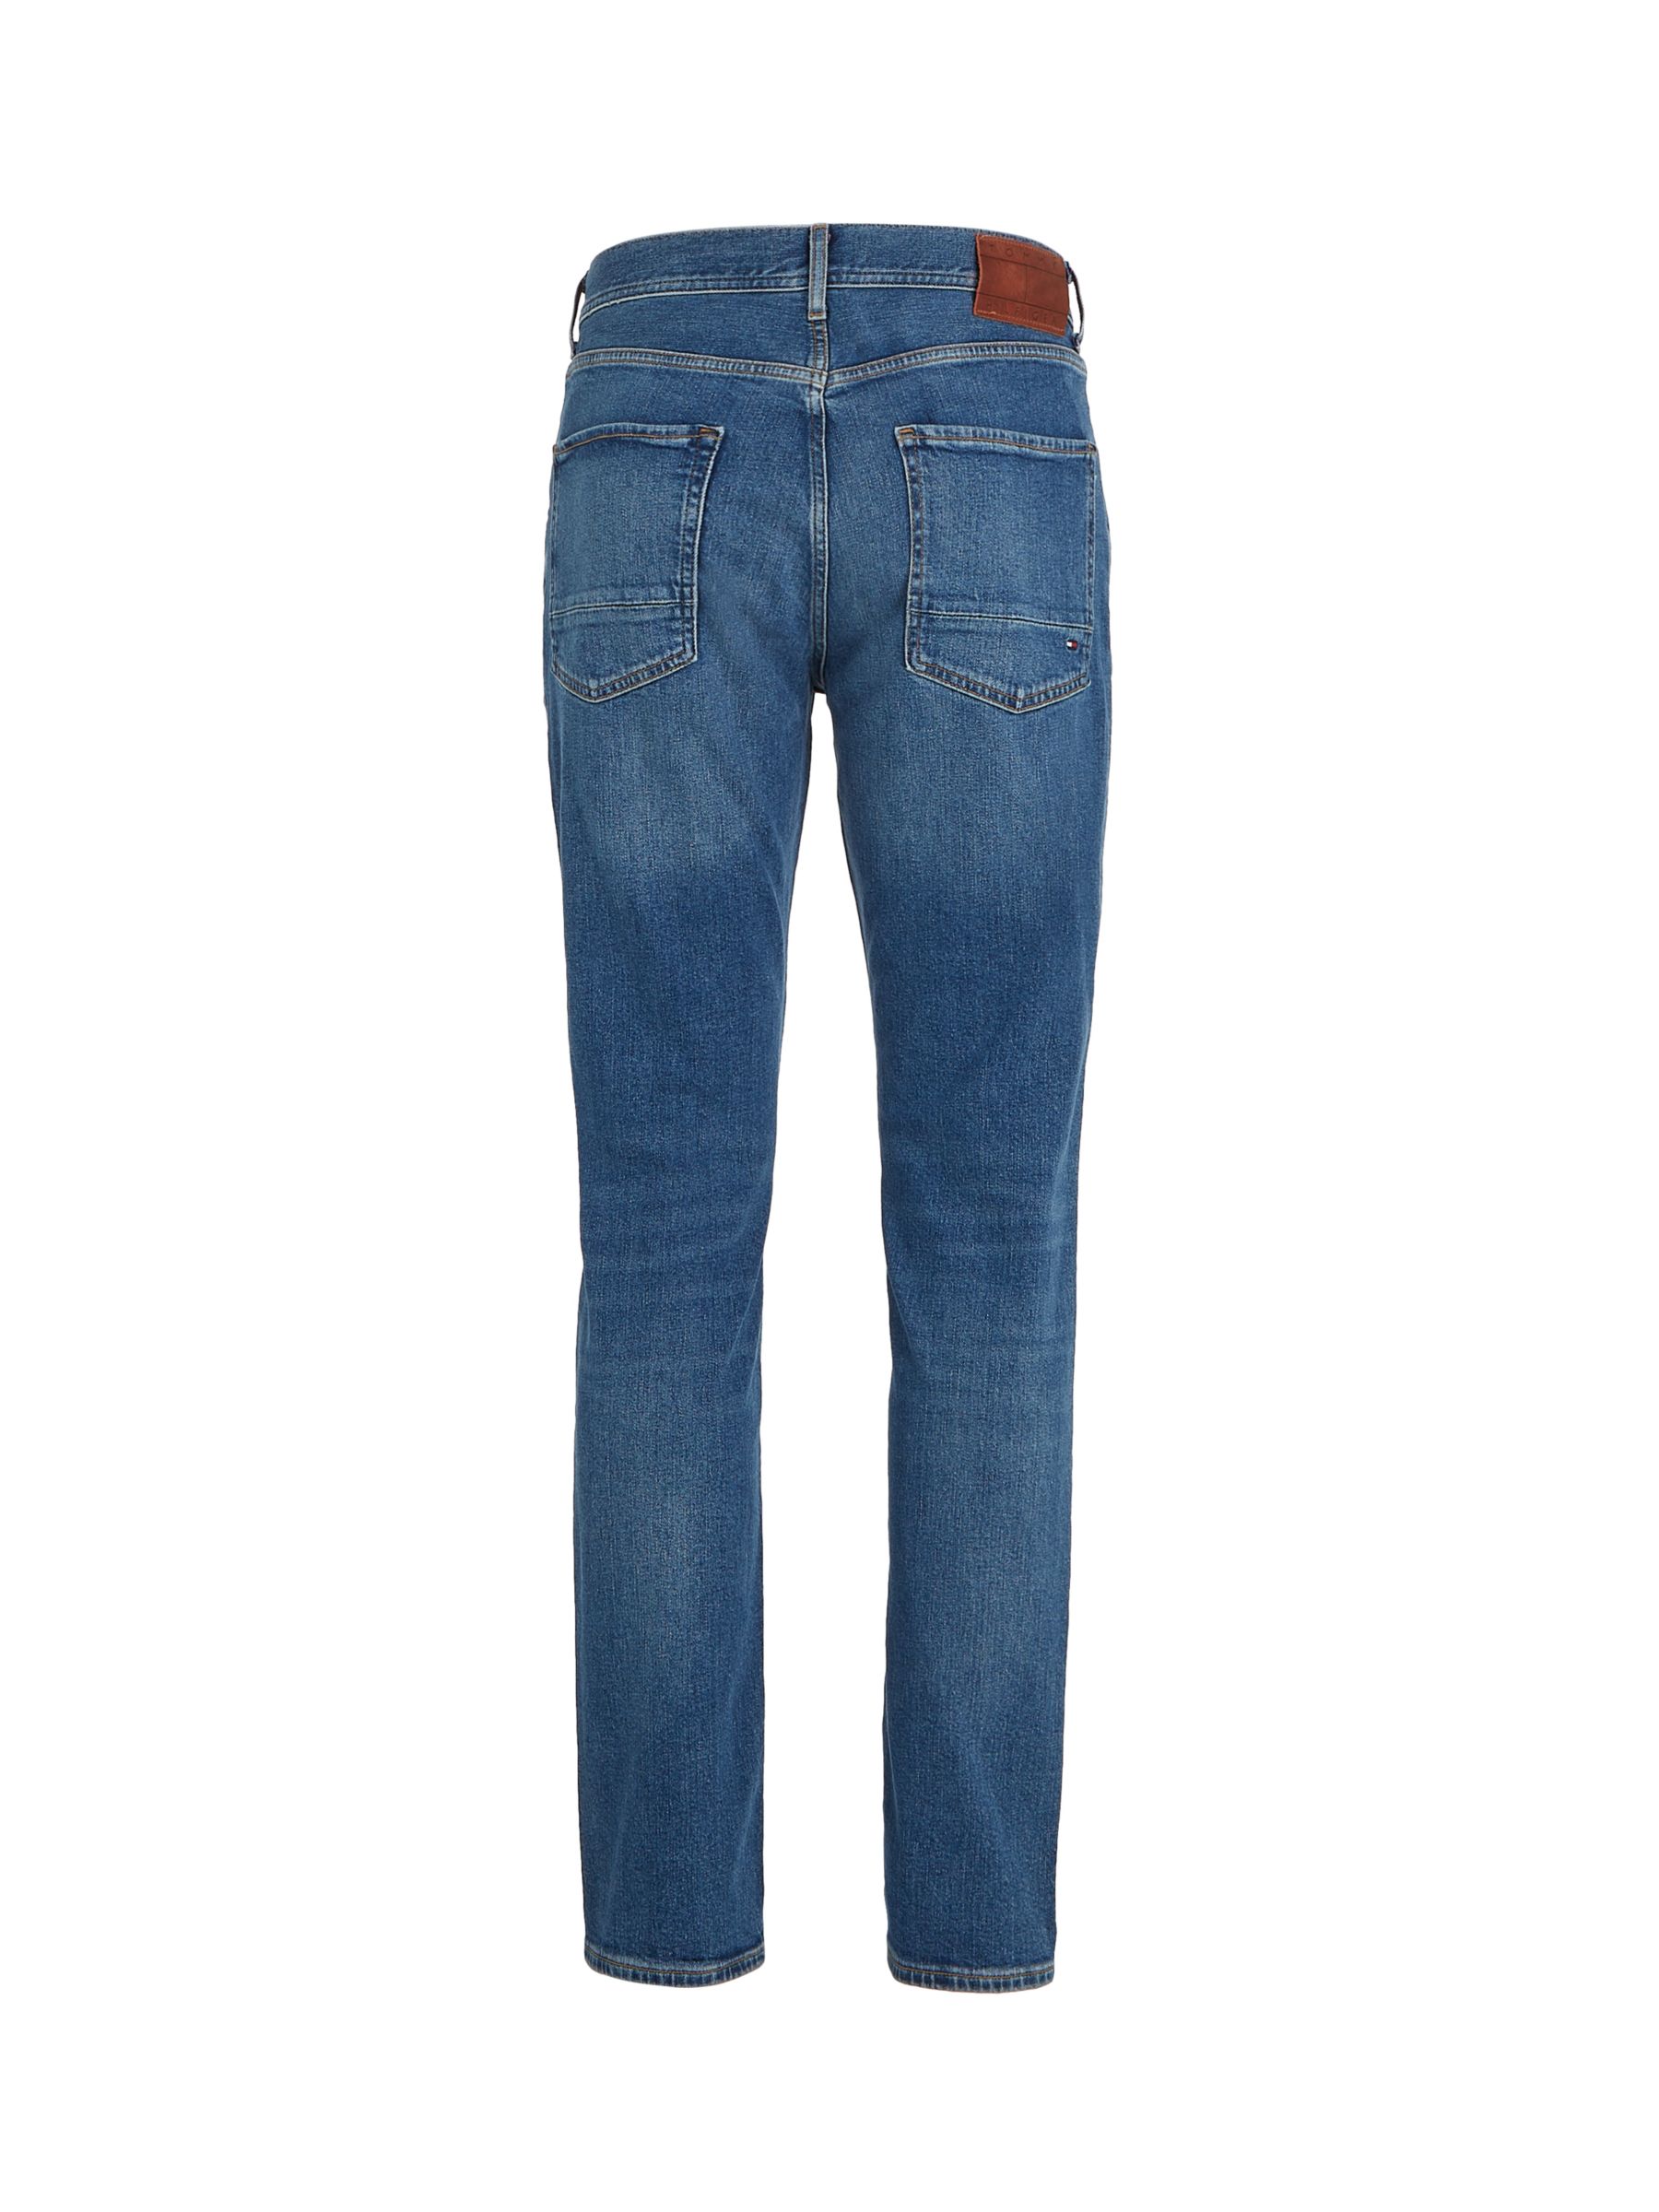 Buy Tommy Hilfiger Denton Straight Jeans, Boston Blue Online at johnlewis.com